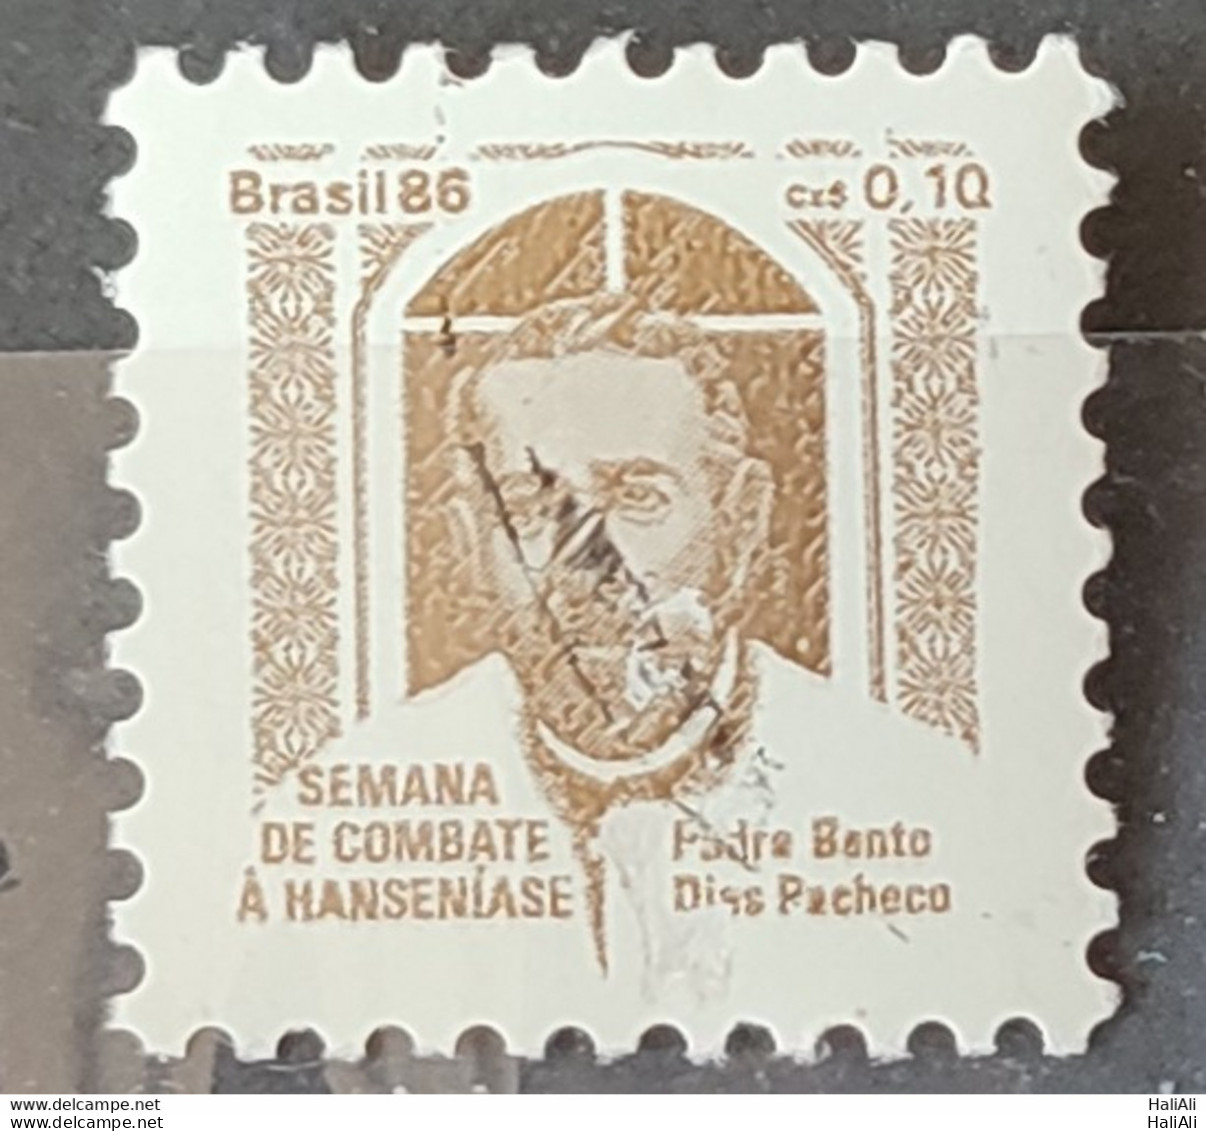 C 1538 Brazil Stamp Combat Against Hansen Hanseniasse Health Father Bento Religion 1986 H23 Circulated 1.jpg - Gebruikt